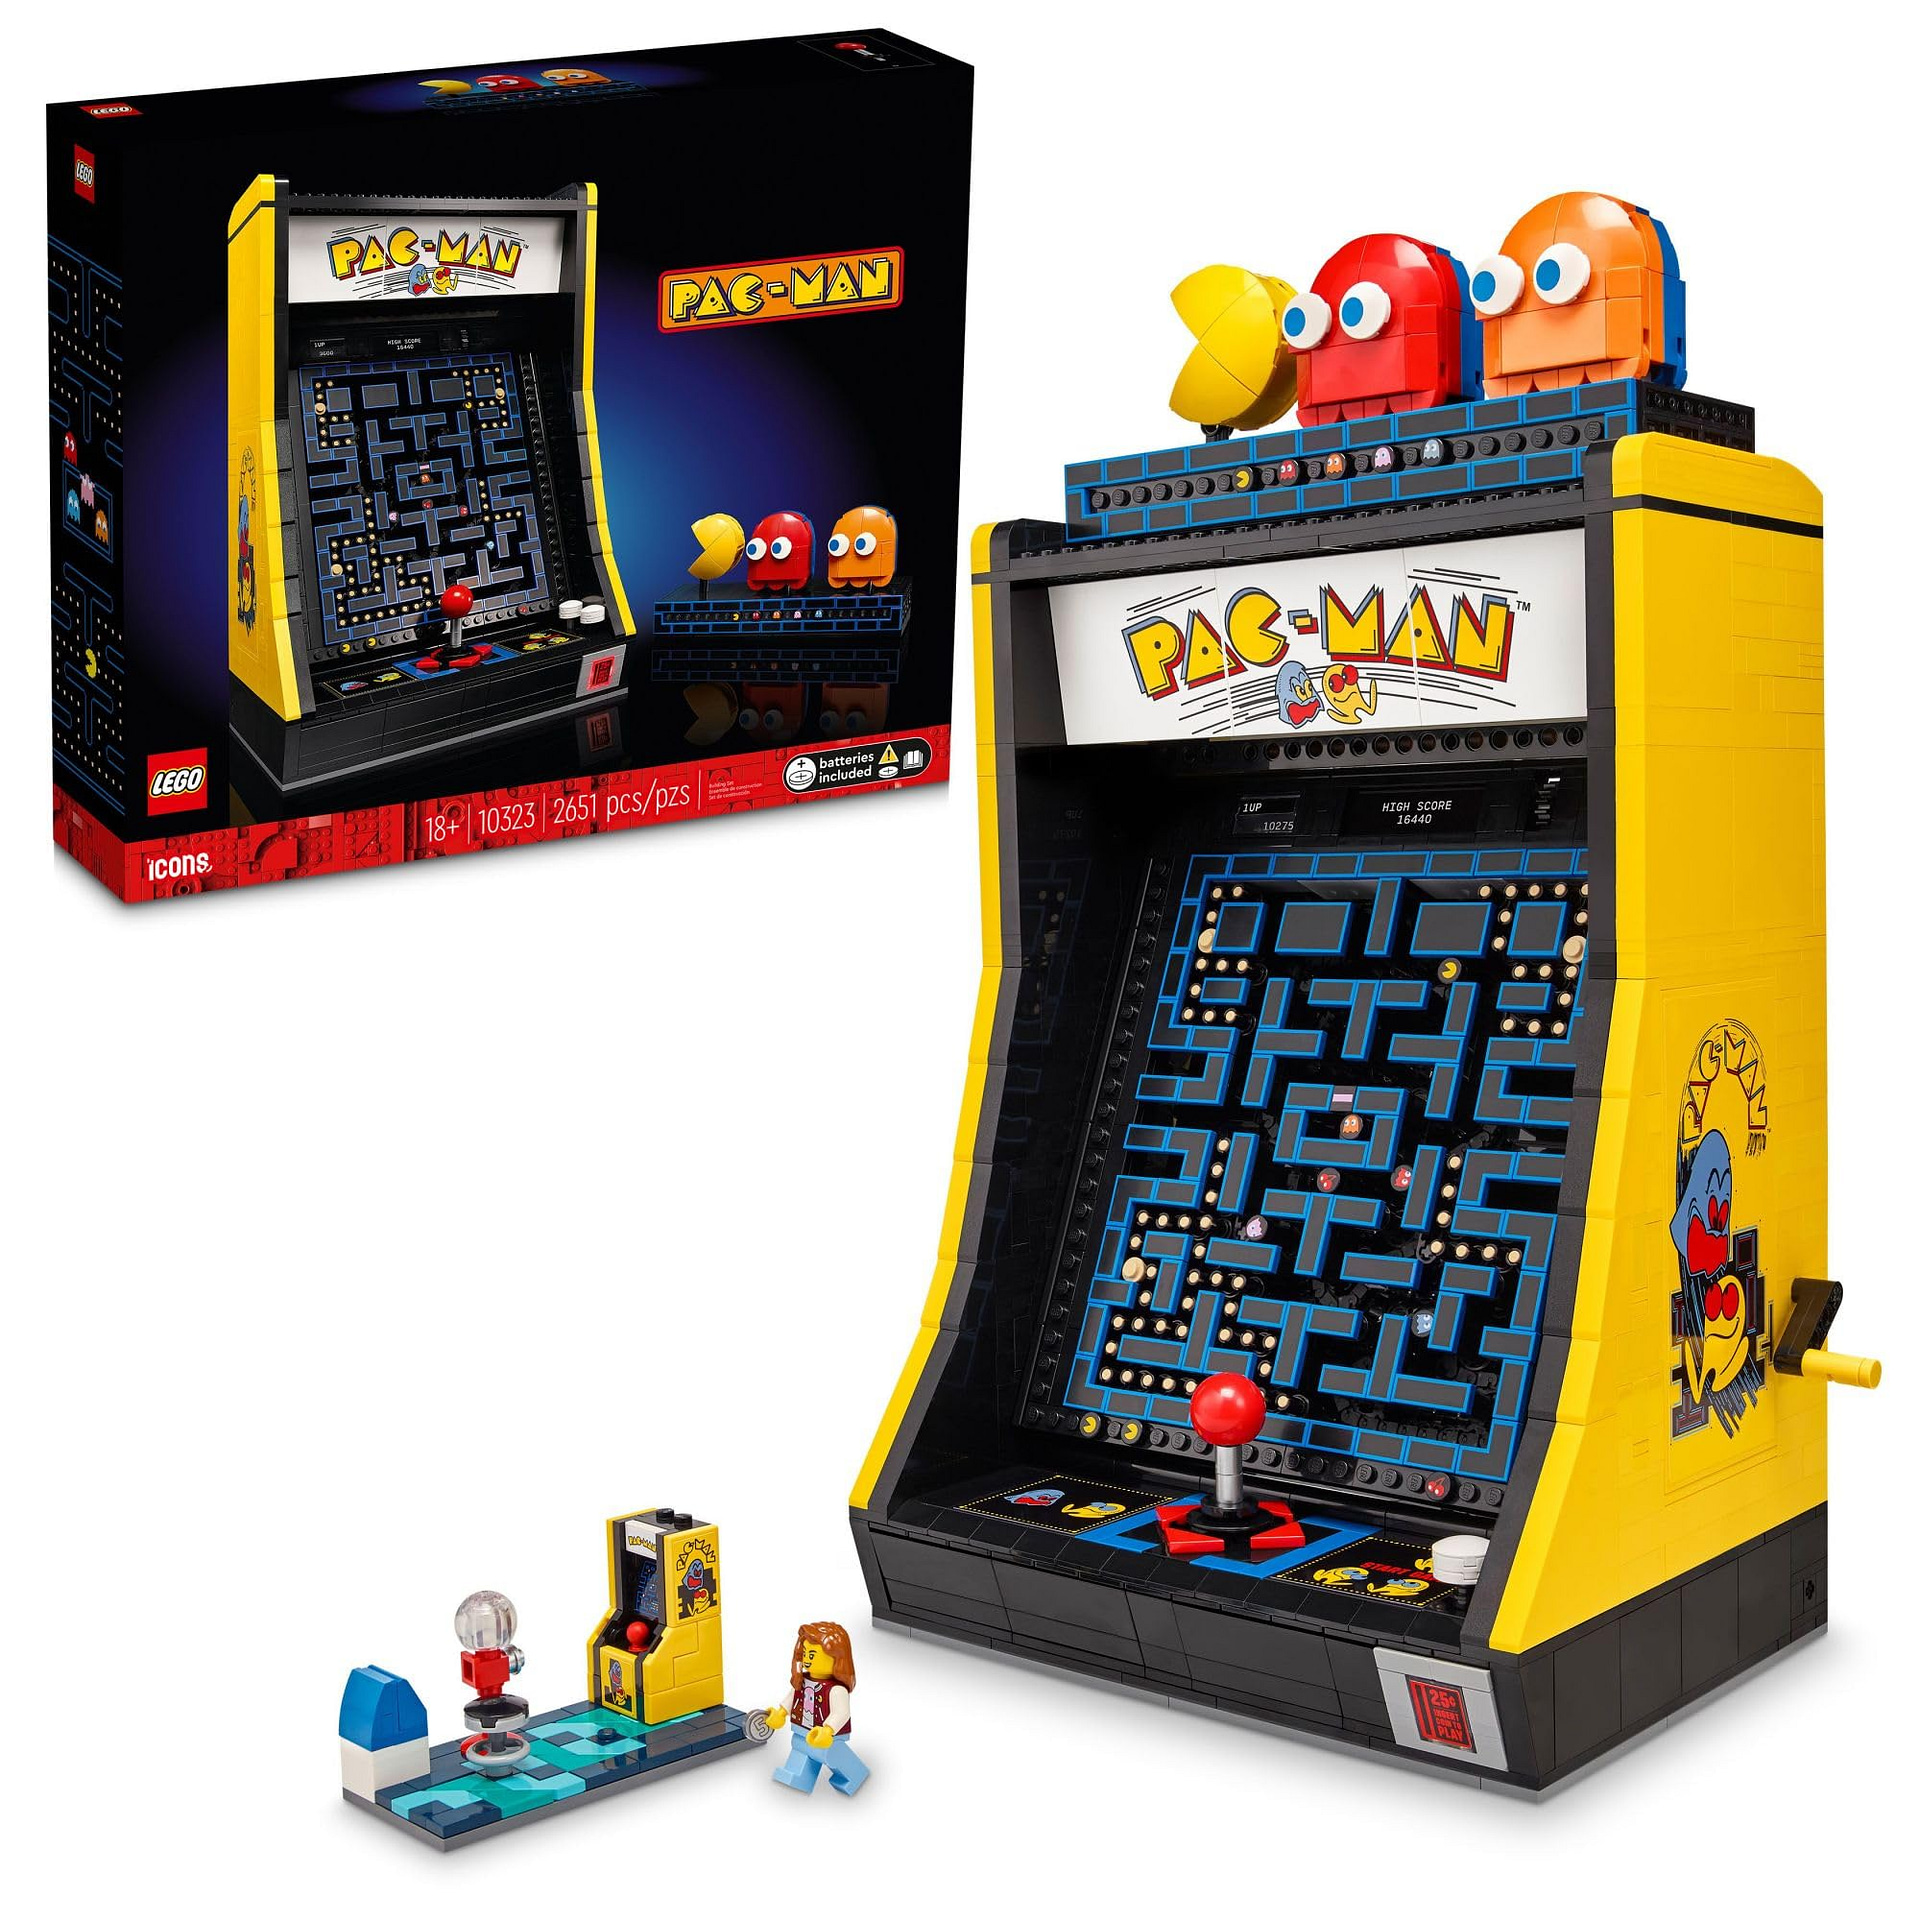 LEGO PAC-Man Arcade Building Kit